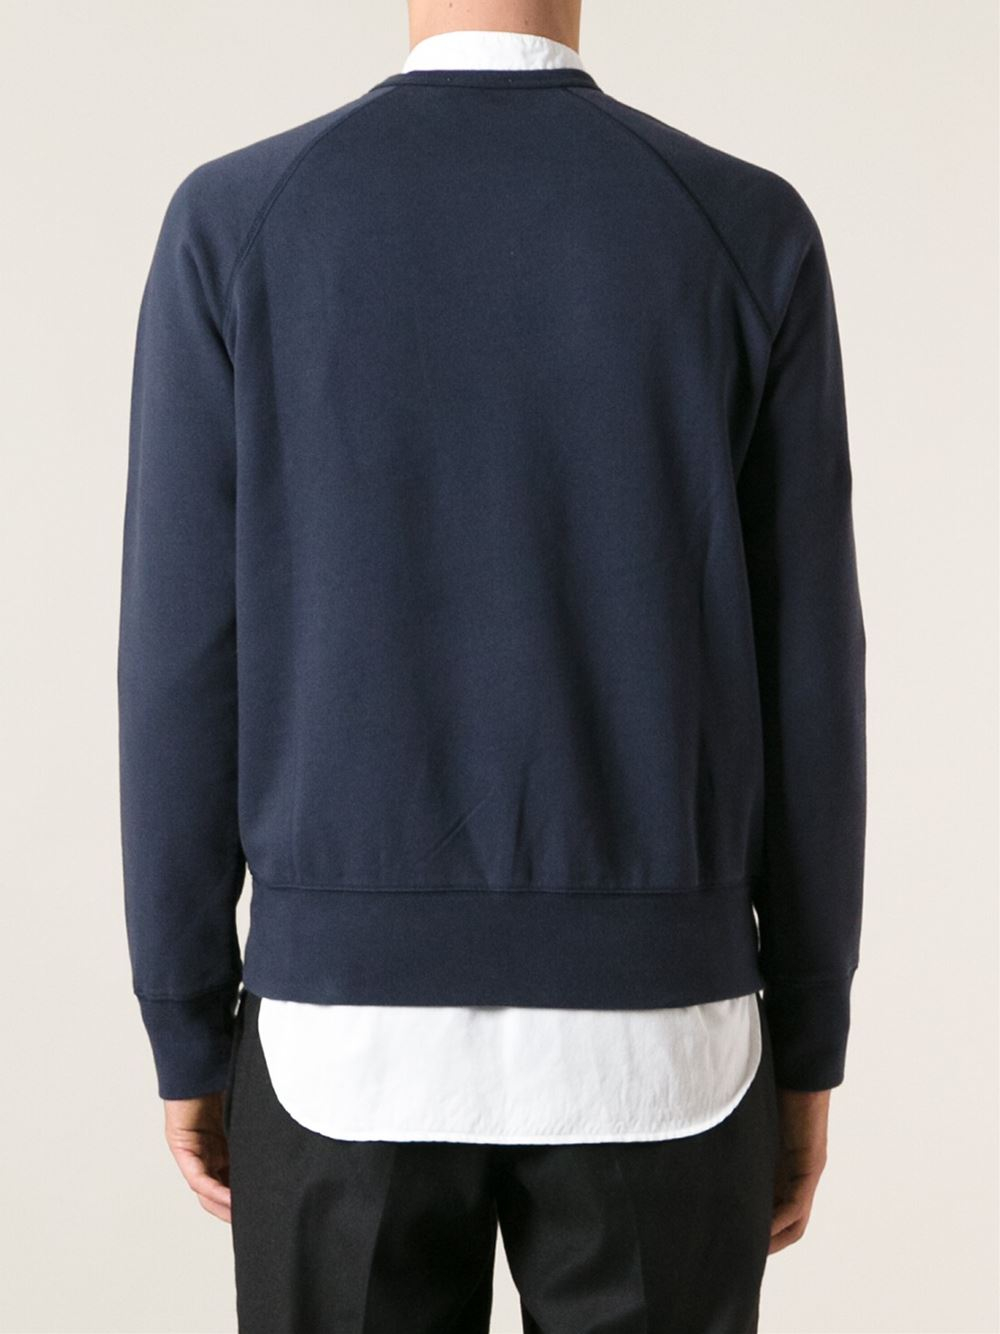 Acne Studios You First Sweatshirt in Blue for Men - Lyst